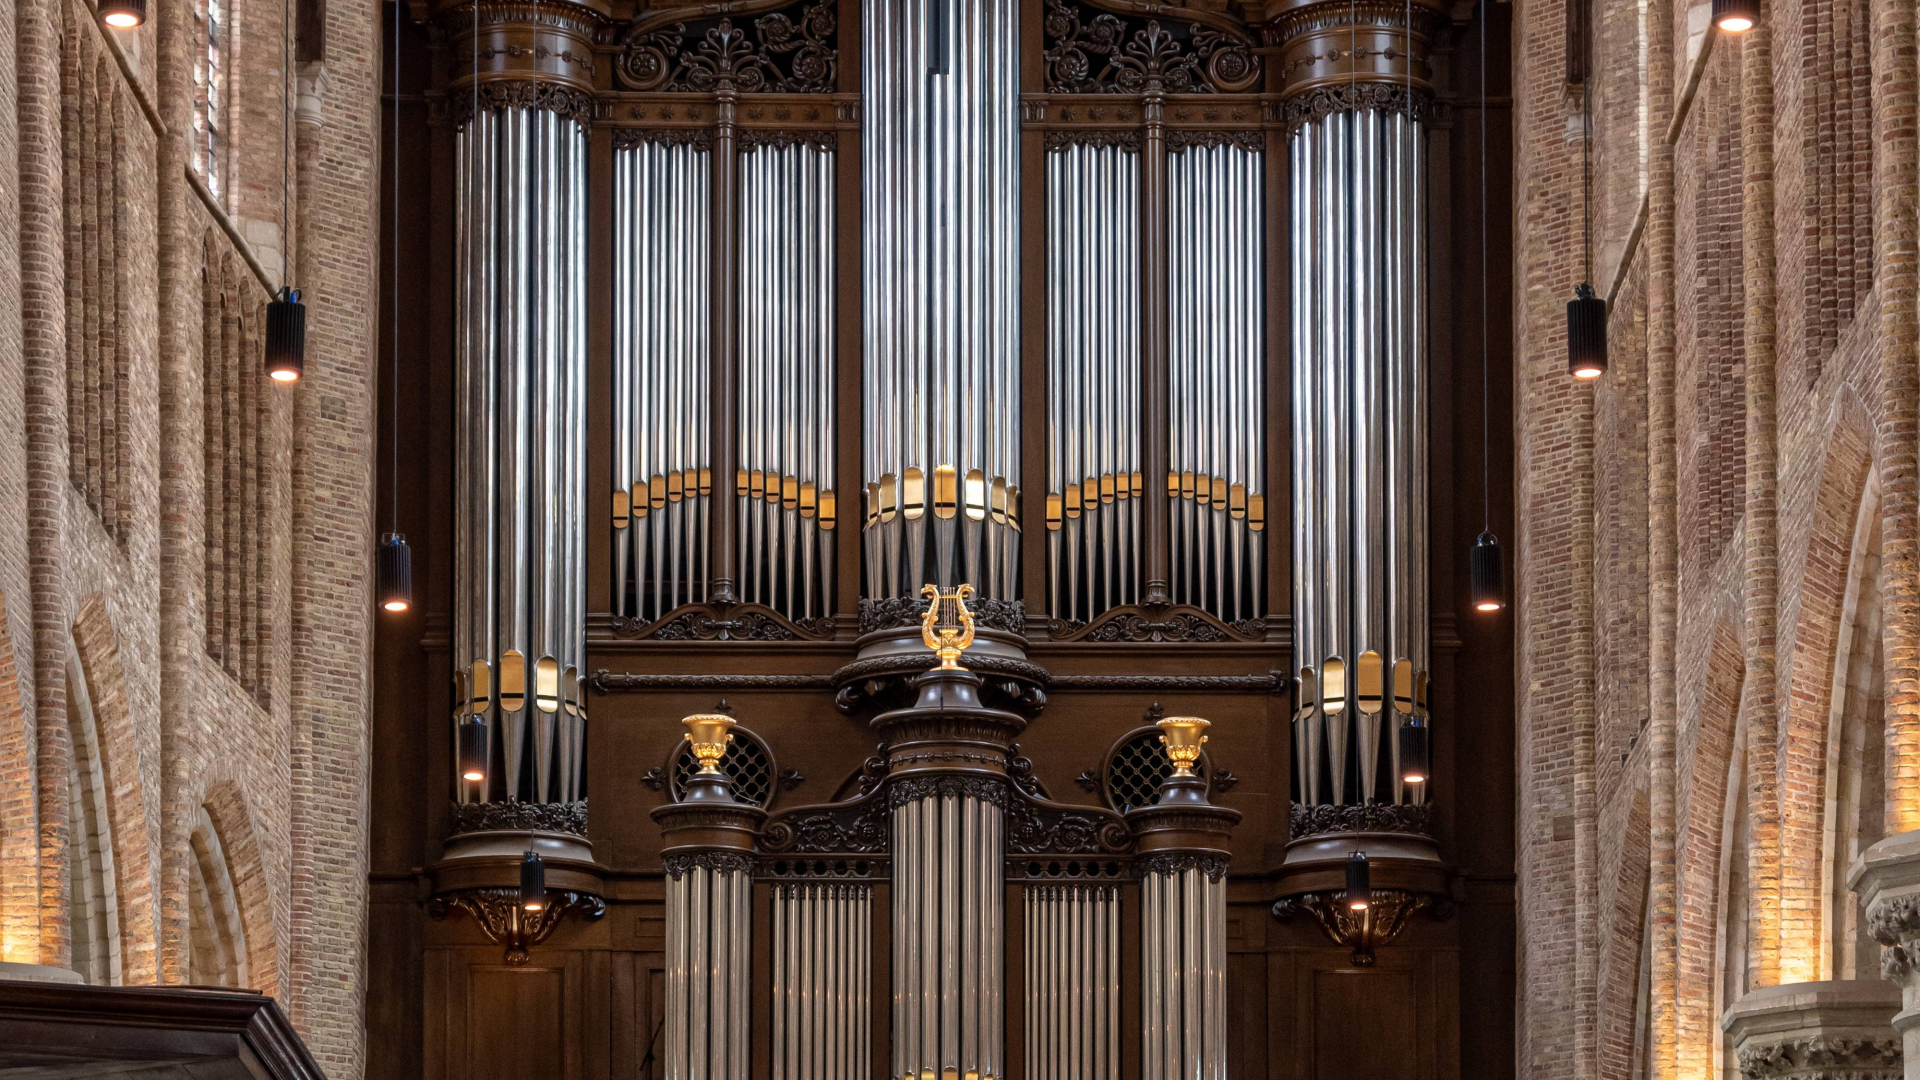 Orgel in kerk